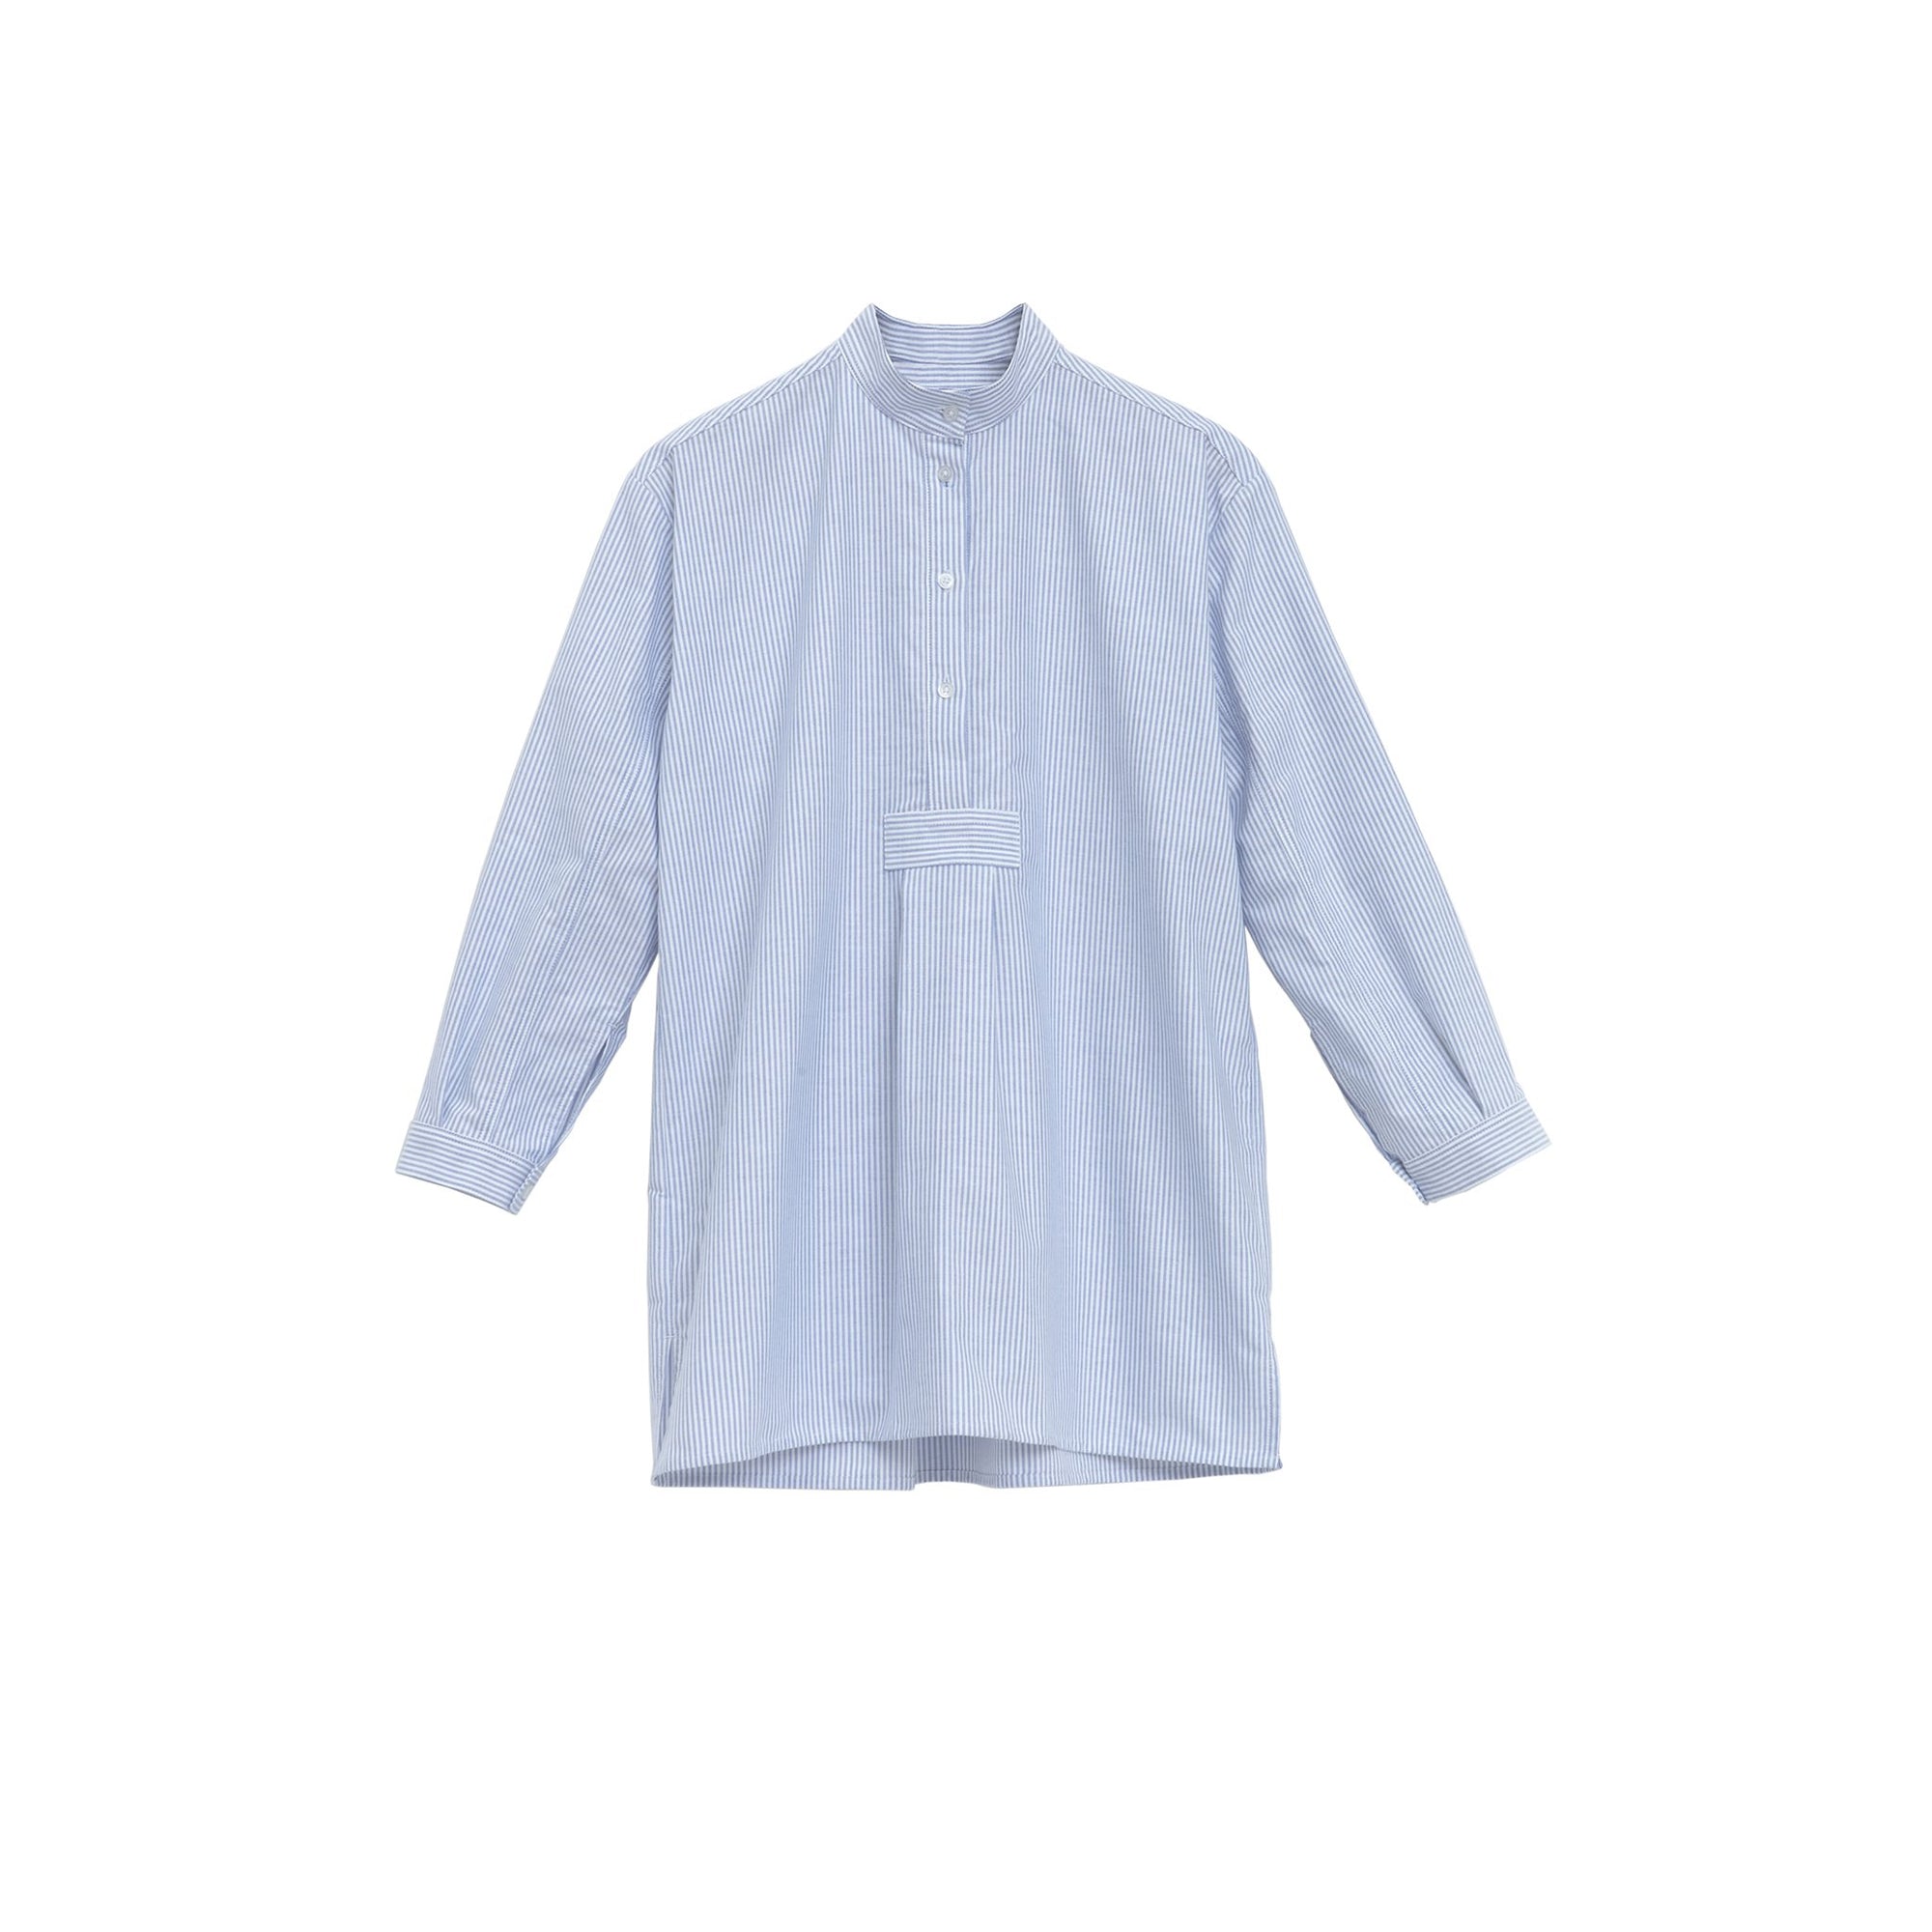 Short Sleep Shirt in Blue Oxford Stripe